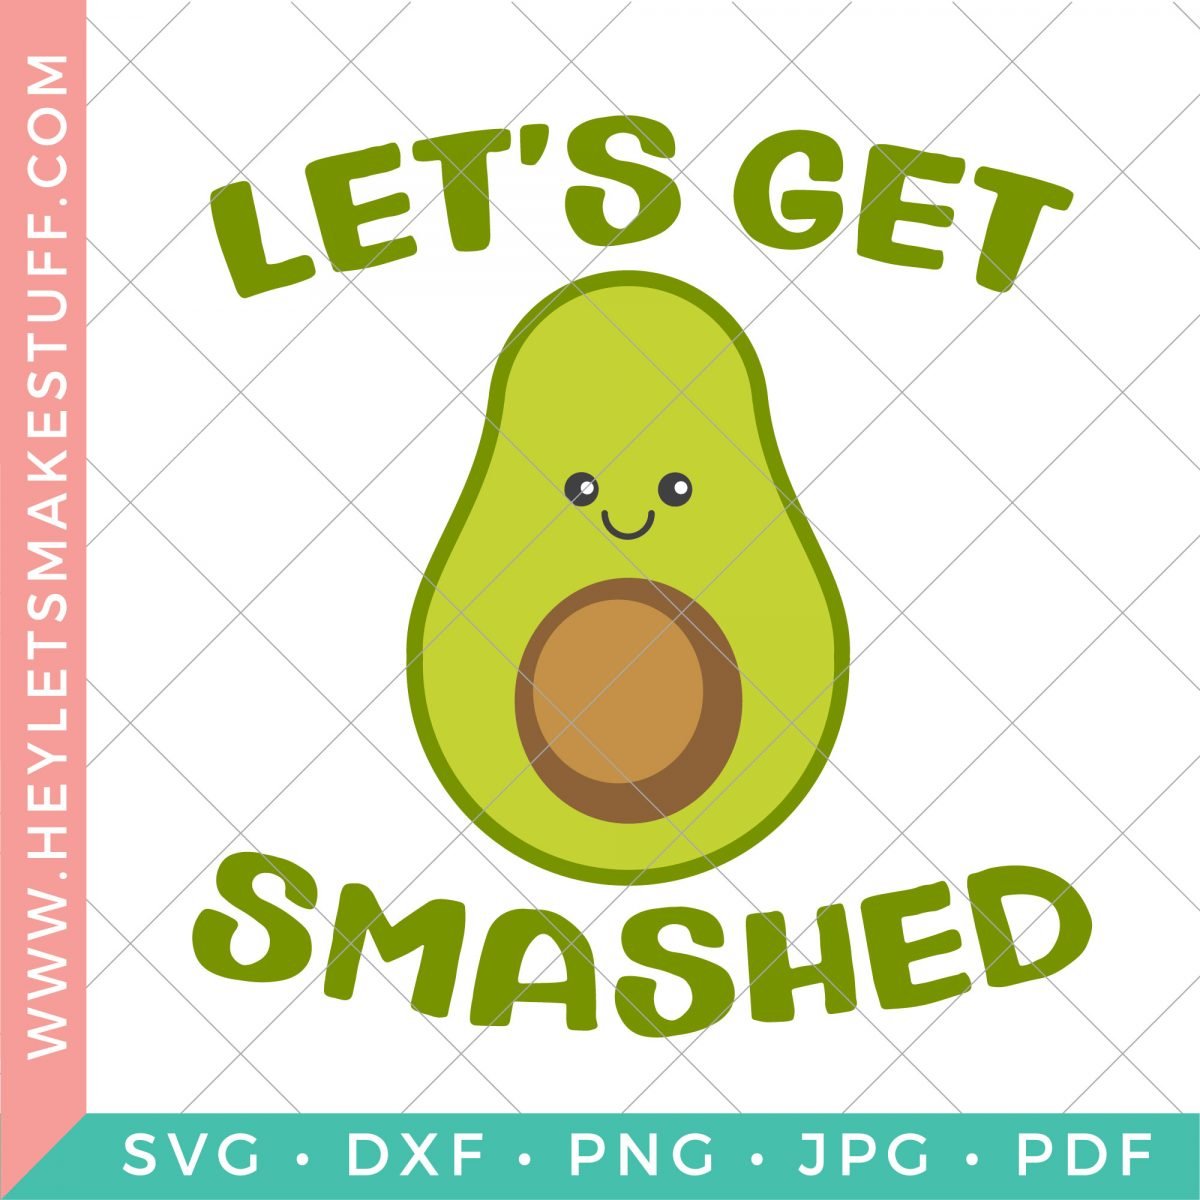 Let's Get Smashed avocado SVG security image